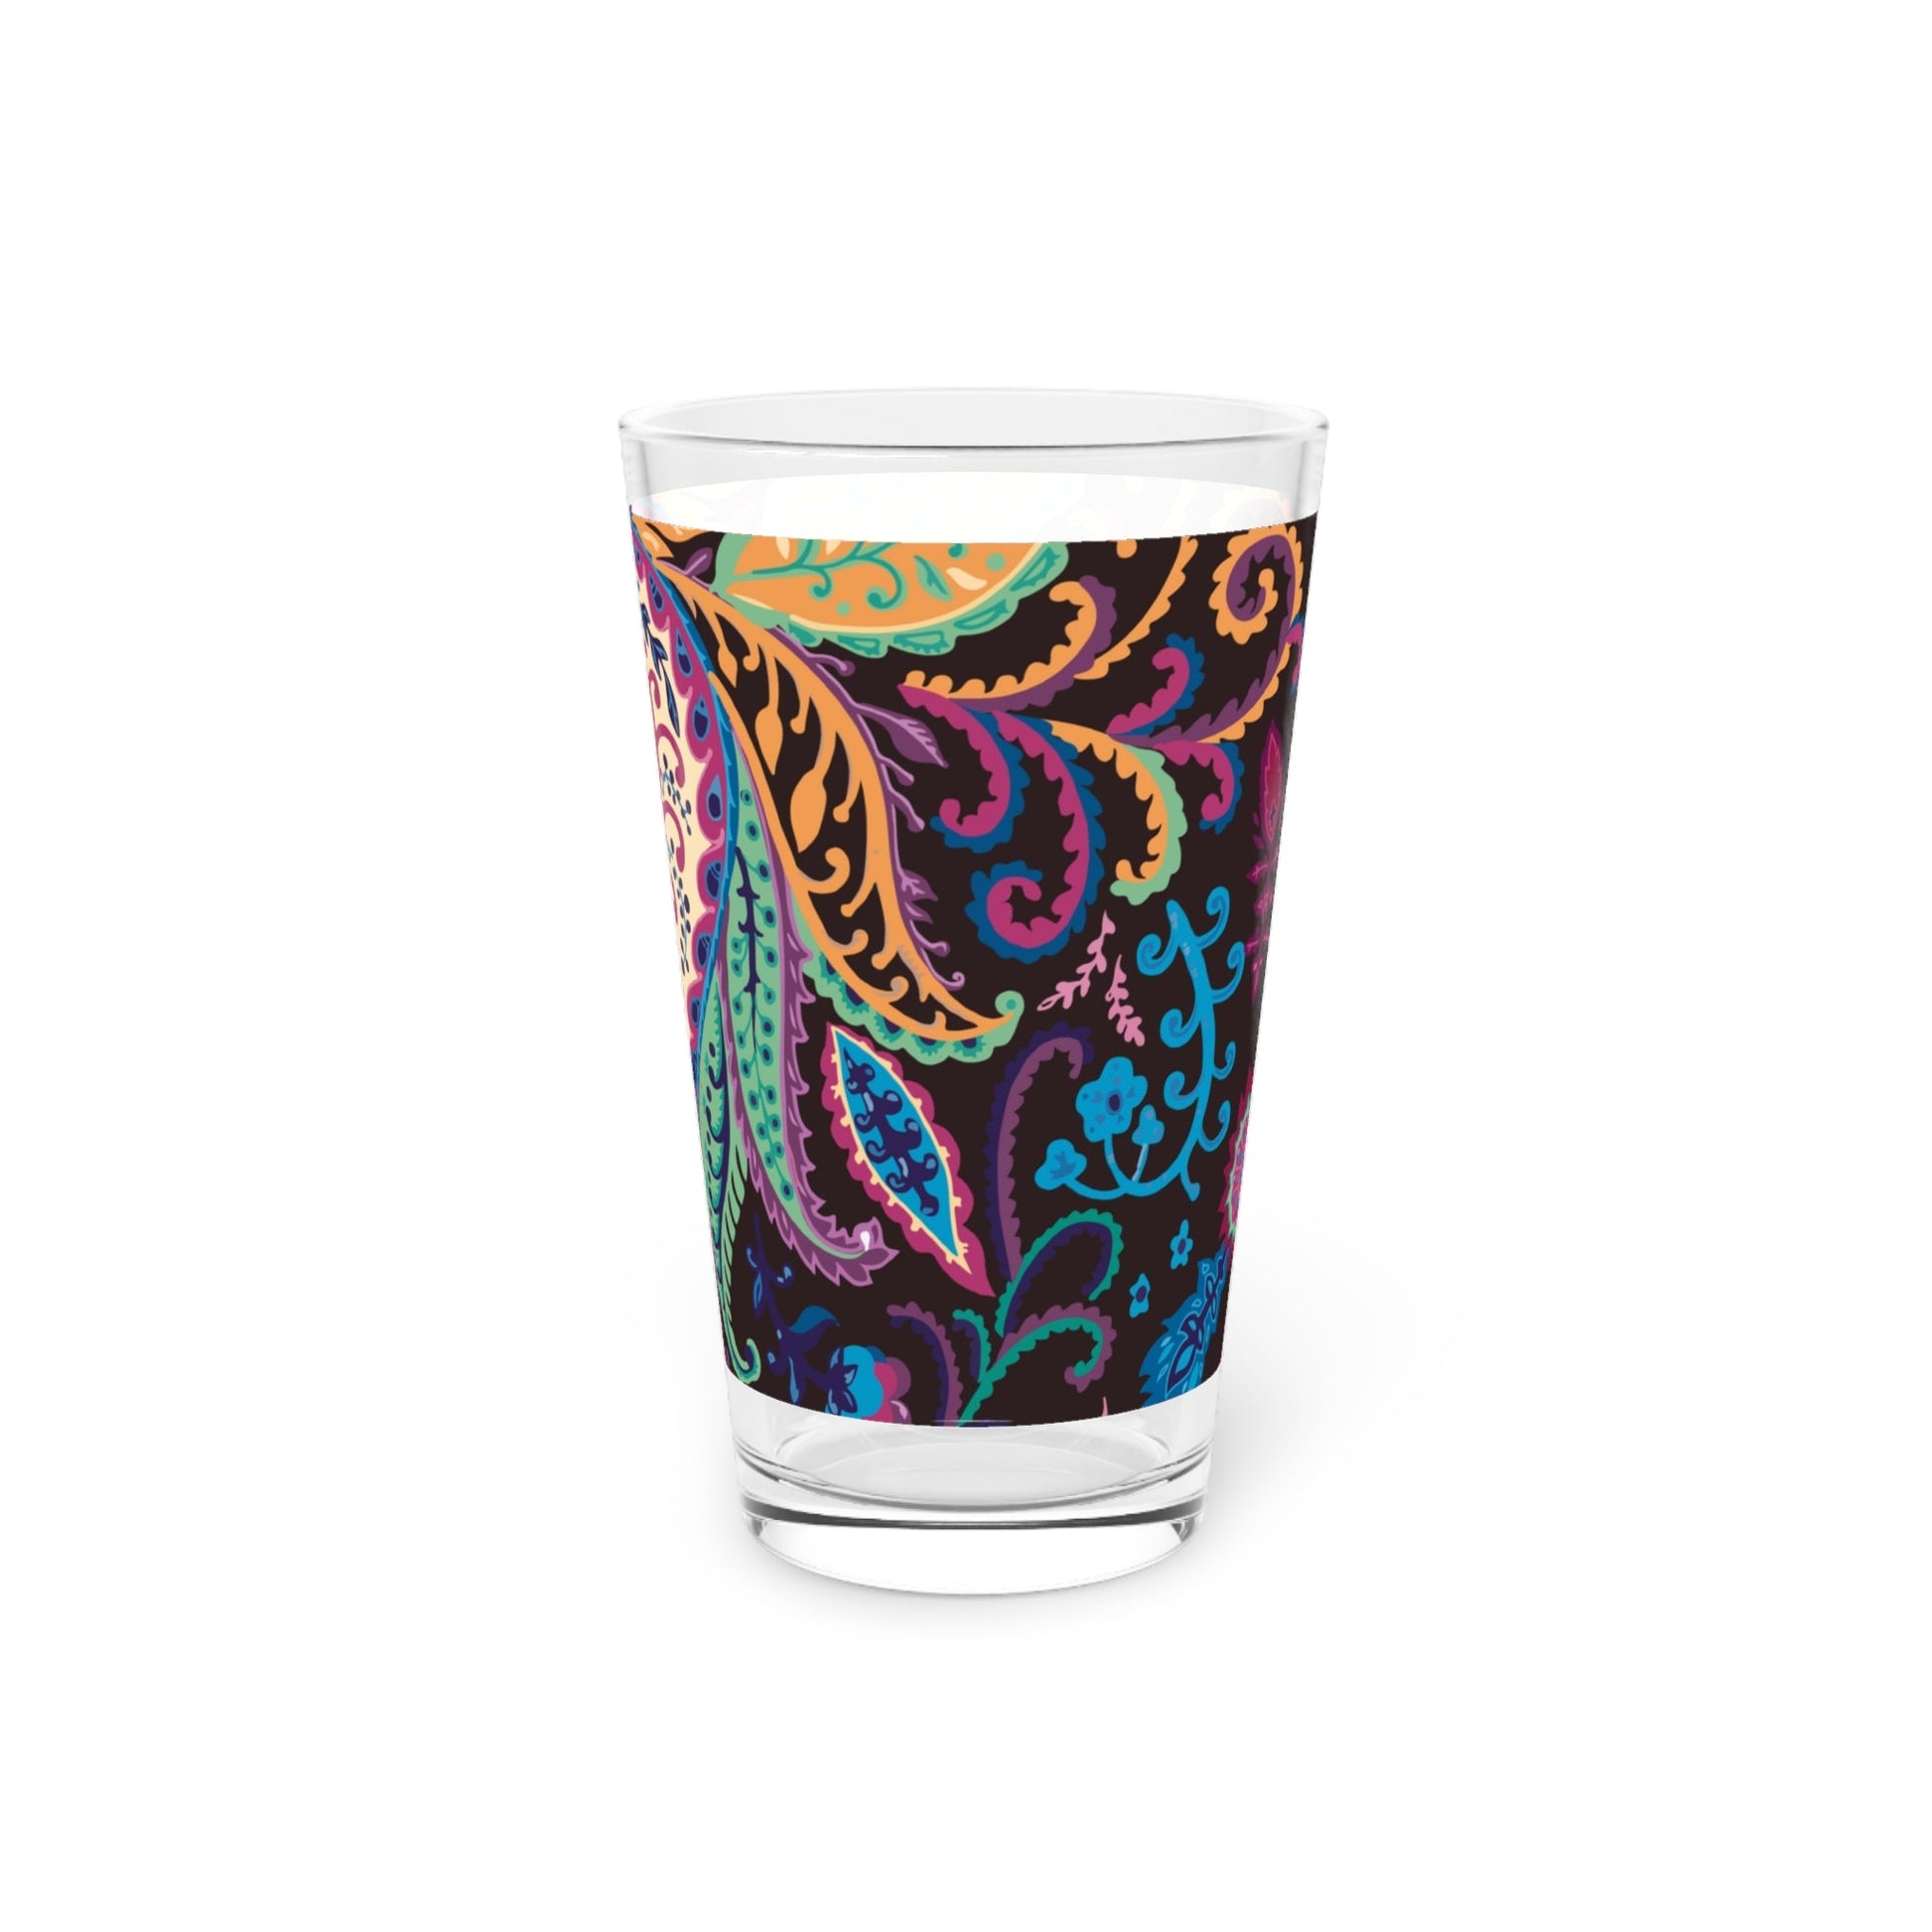 Mug - Psychedelic Pint Glass, 16oz